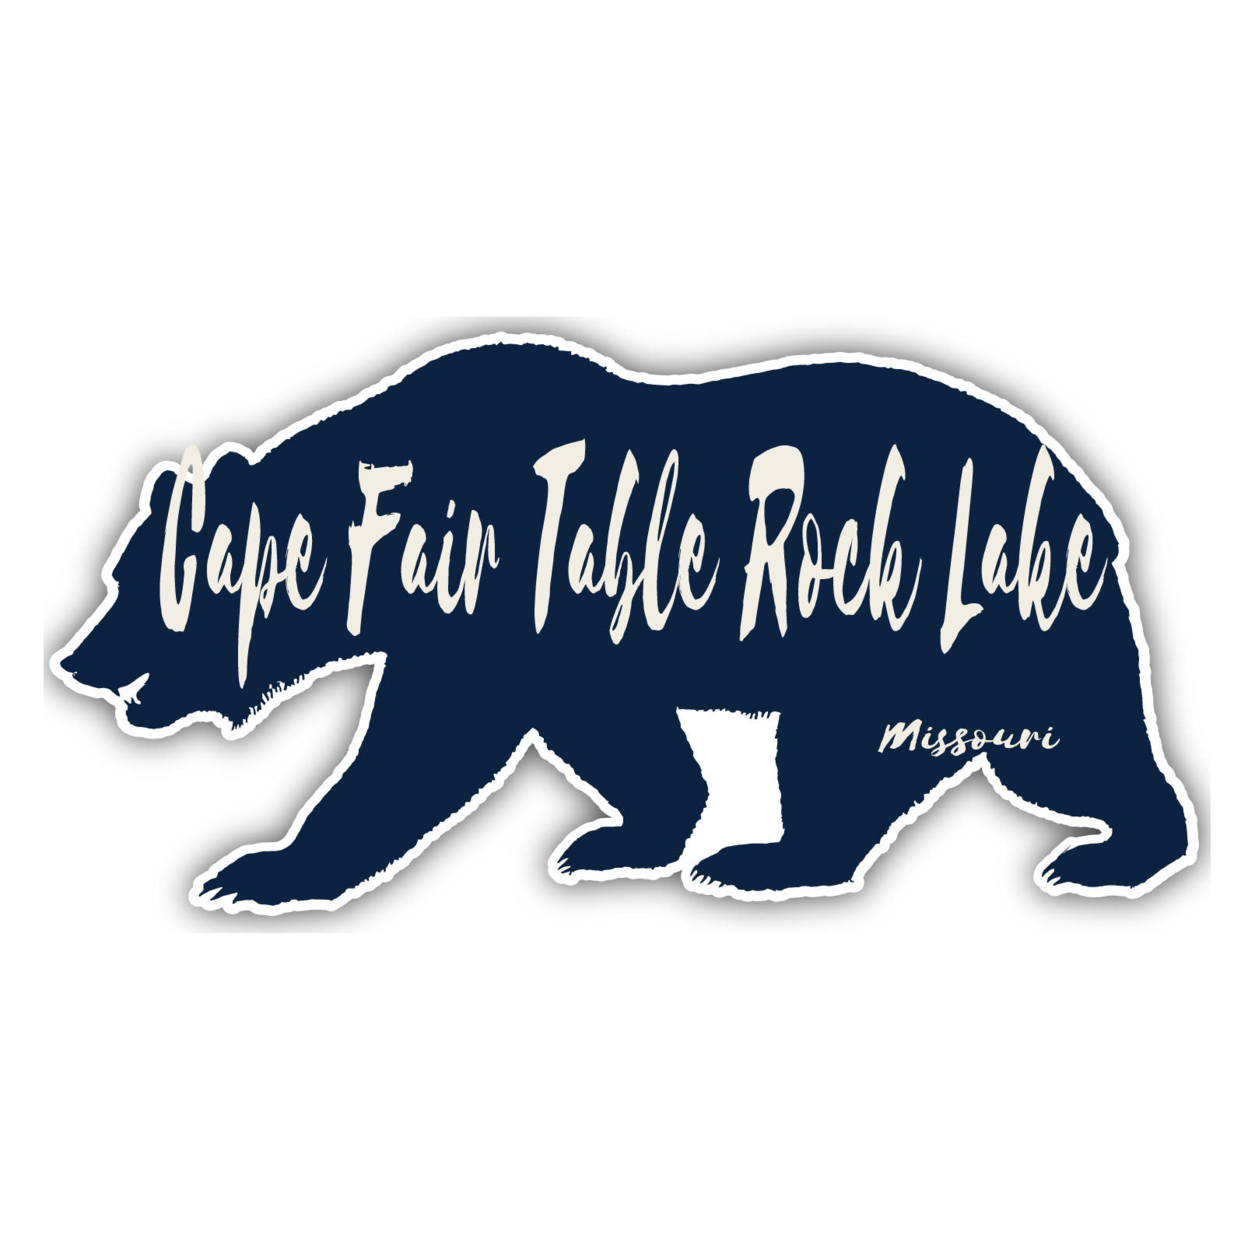 Cape Fair Table Rock Lake Missouri Souvenir Decorative Stickers (Choose Theme And Size) - Single Unit, 6-Inch, Bear